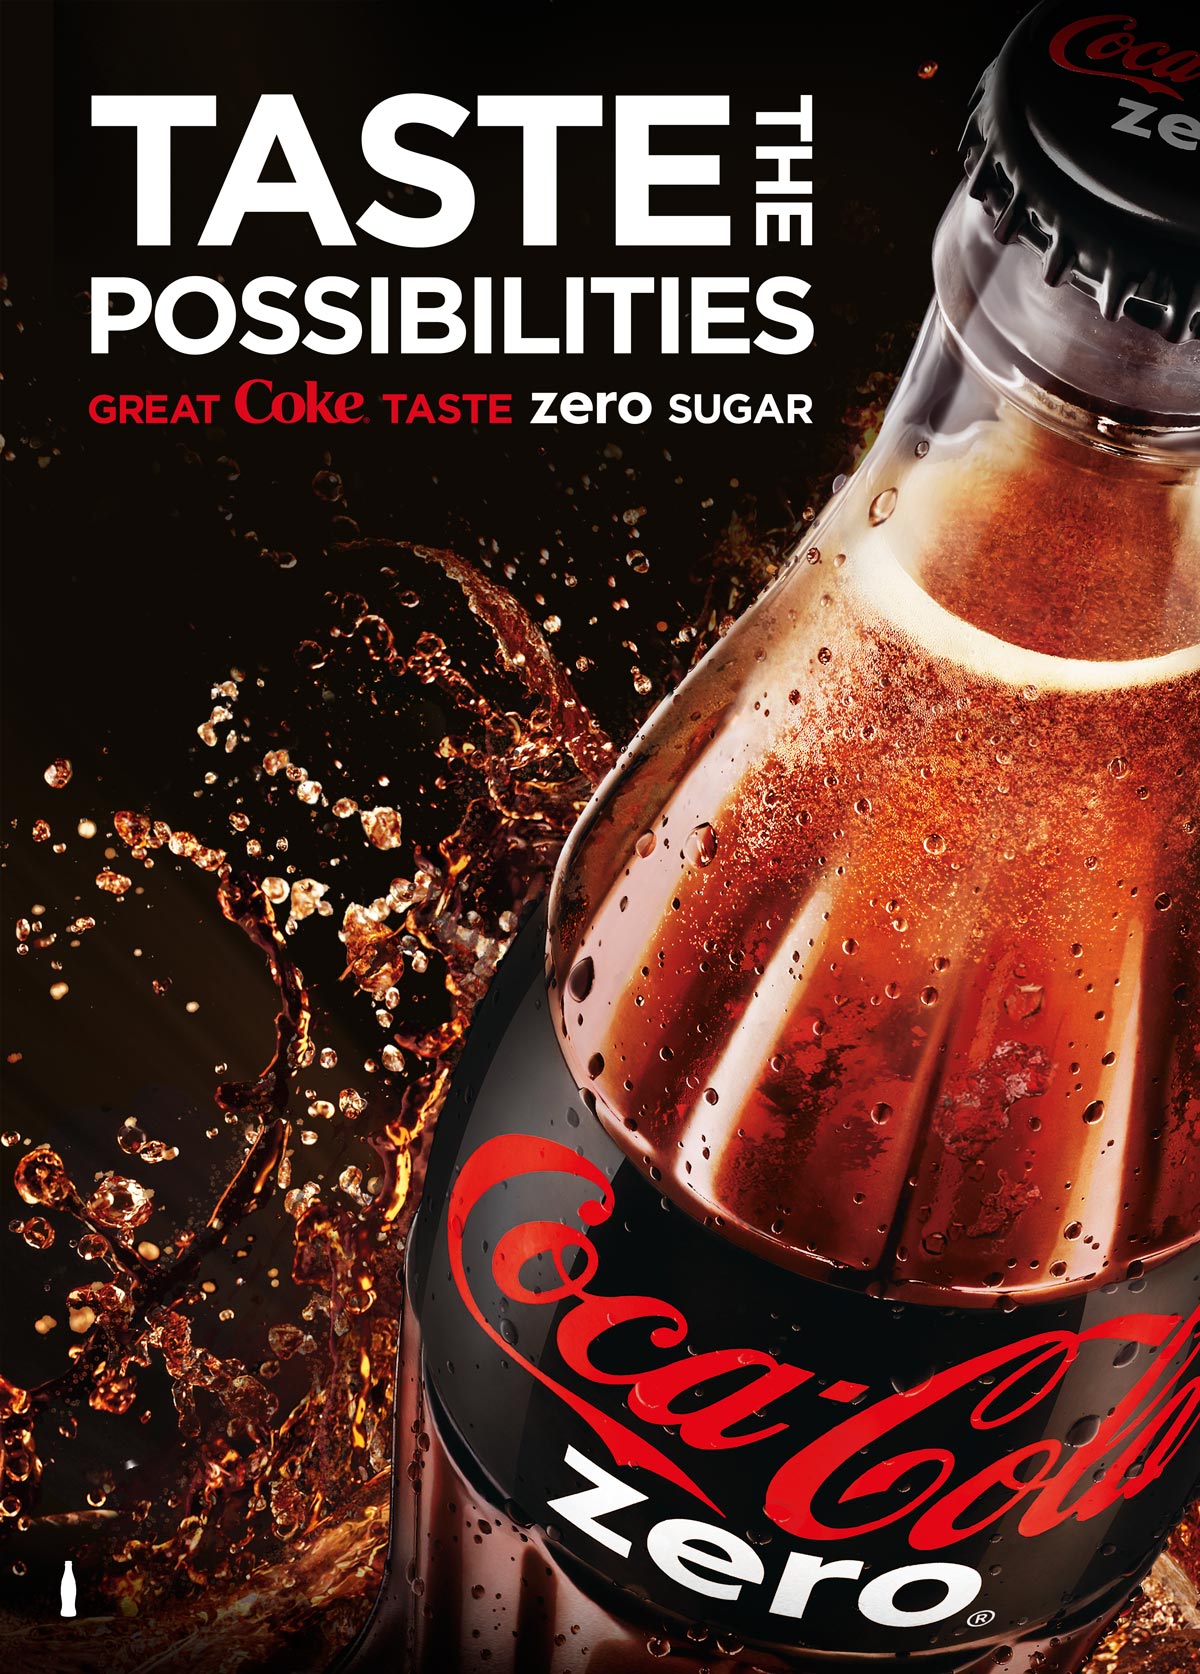 Coke Zero Advertising campaign key image